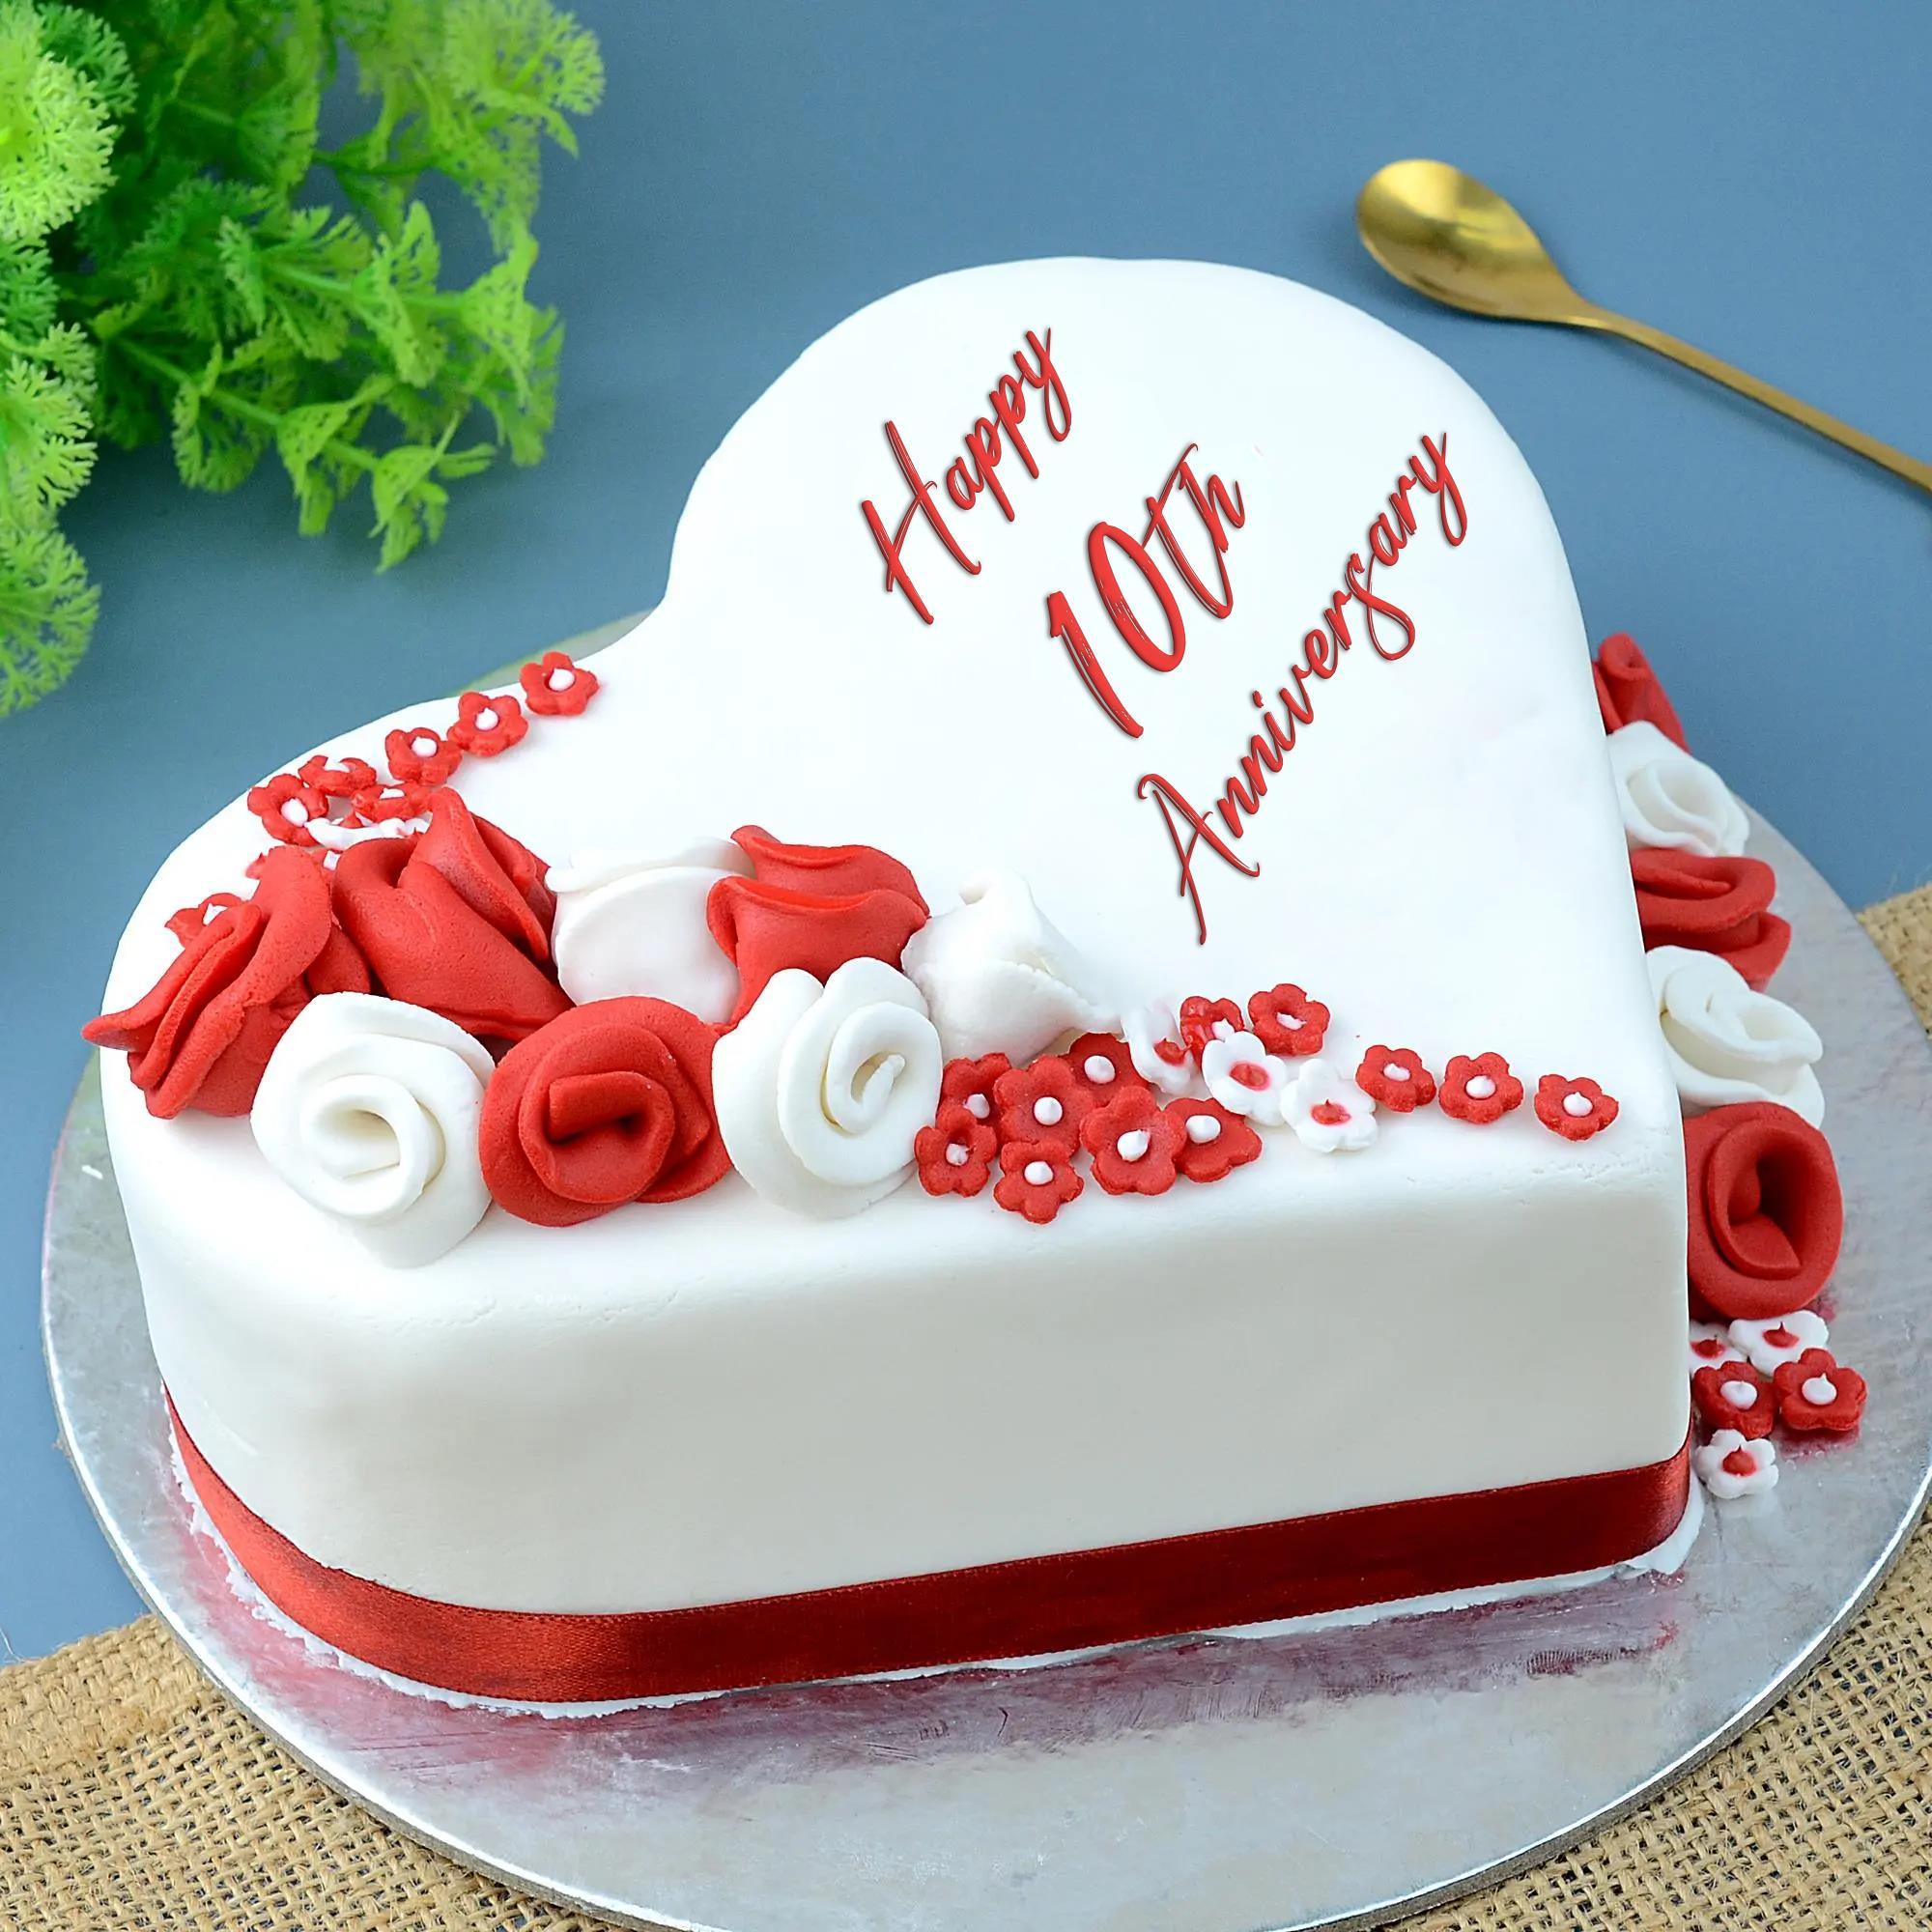 10th Anniversary Cake - Decorated Cake by Ritsa - CakesDecor